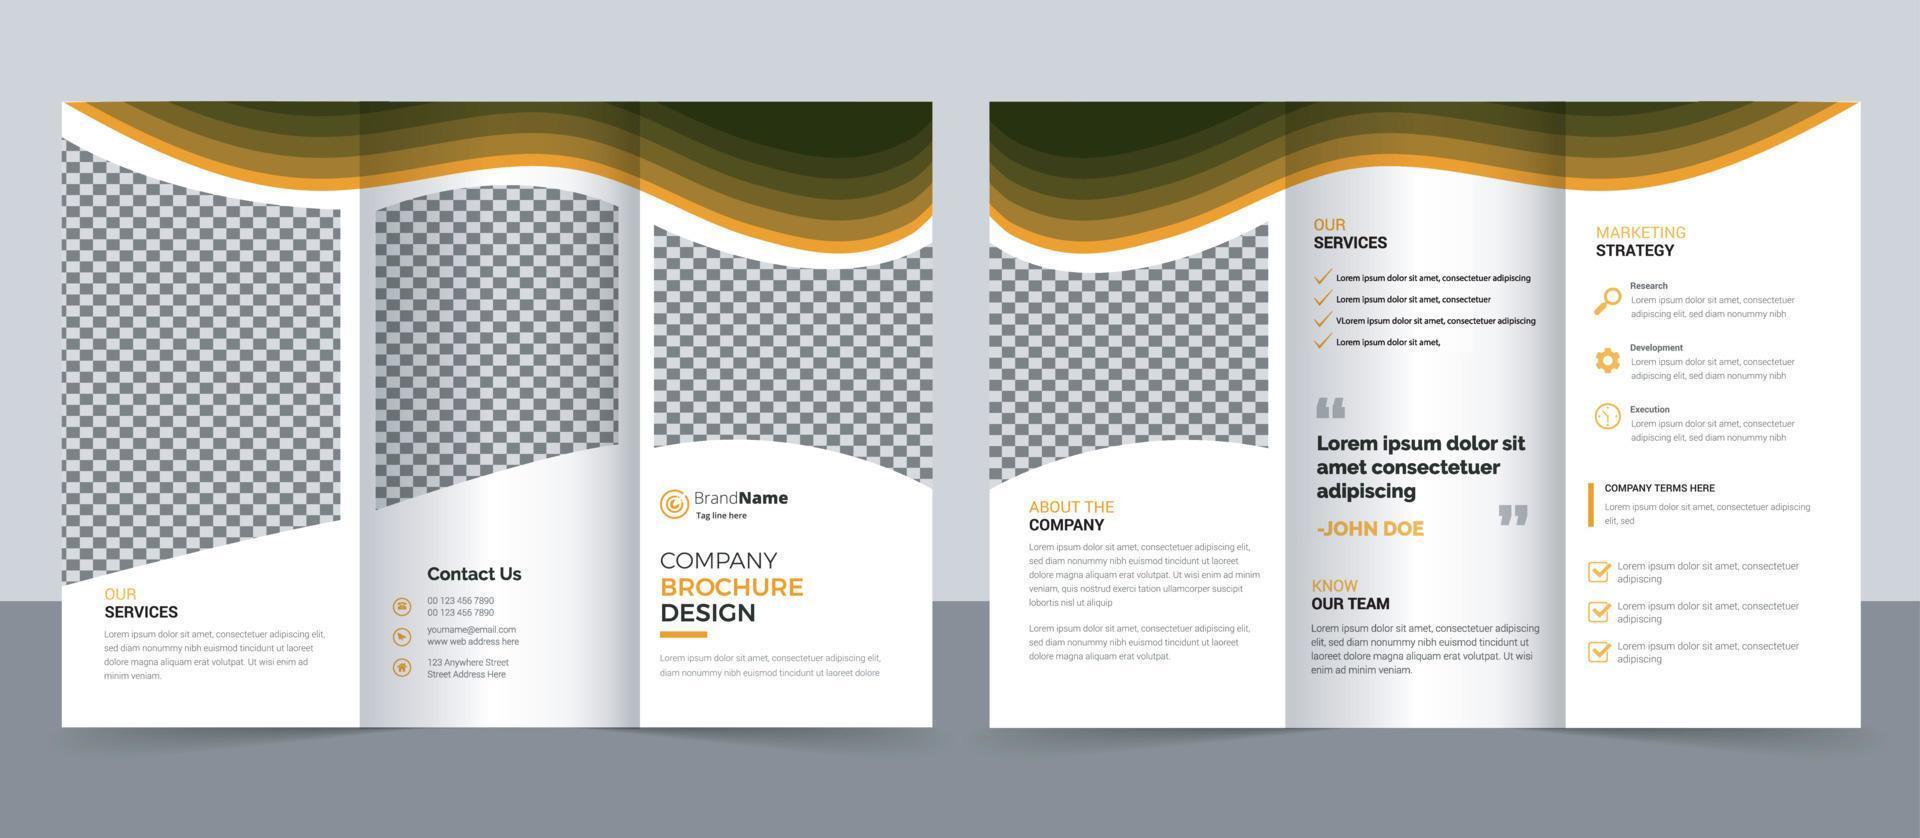 Plantilla de folleto comercial en diseño tríptico. folleto de diseño corporativo con imagen replicable. vector